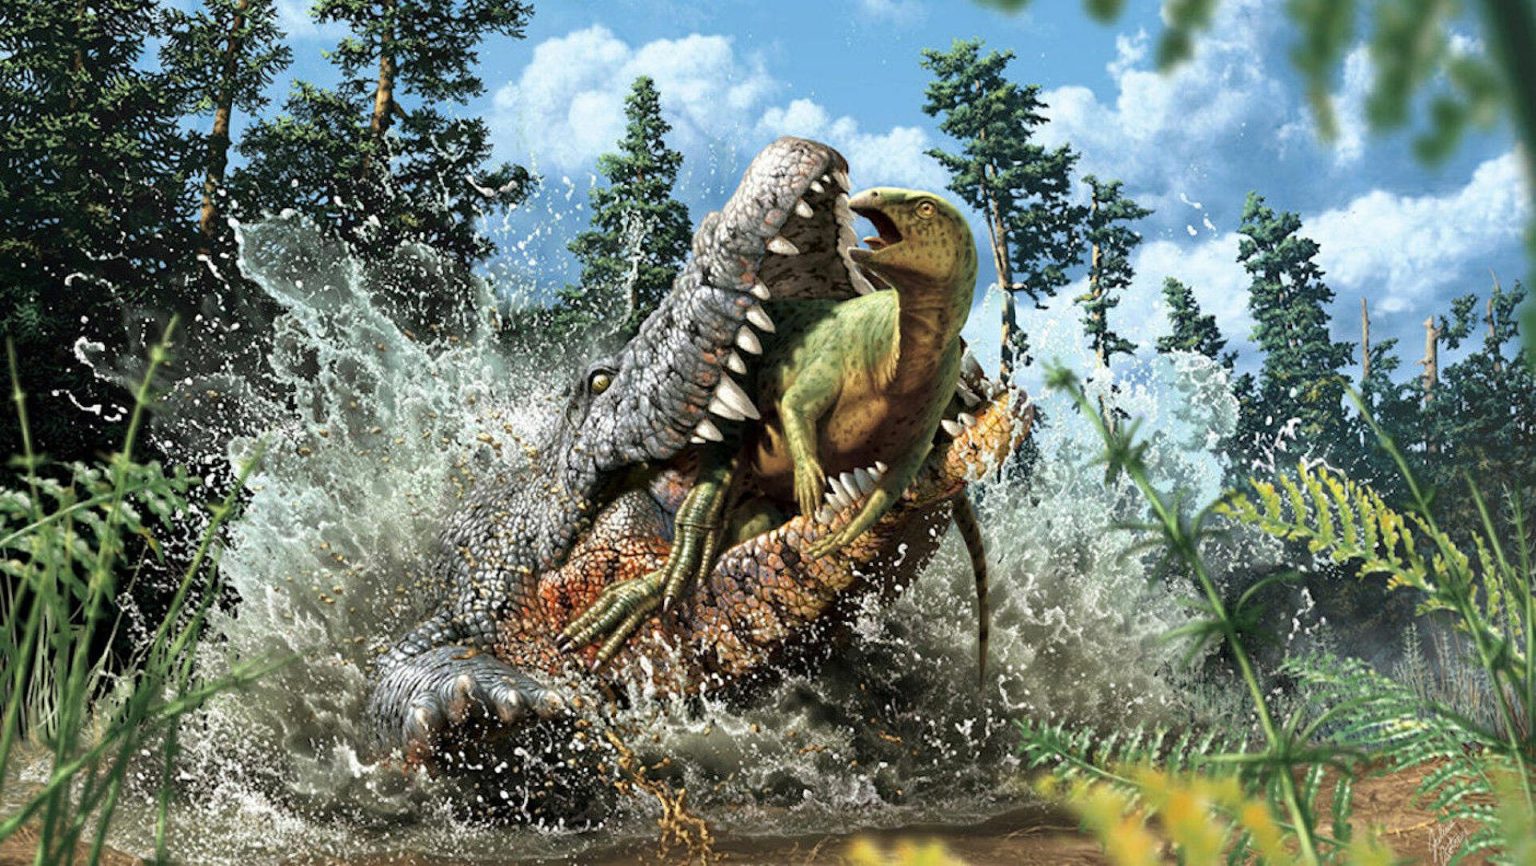 https://scitechdaily.com/images/Crocodile-Eats-Dinosaur-1536x866.jpg